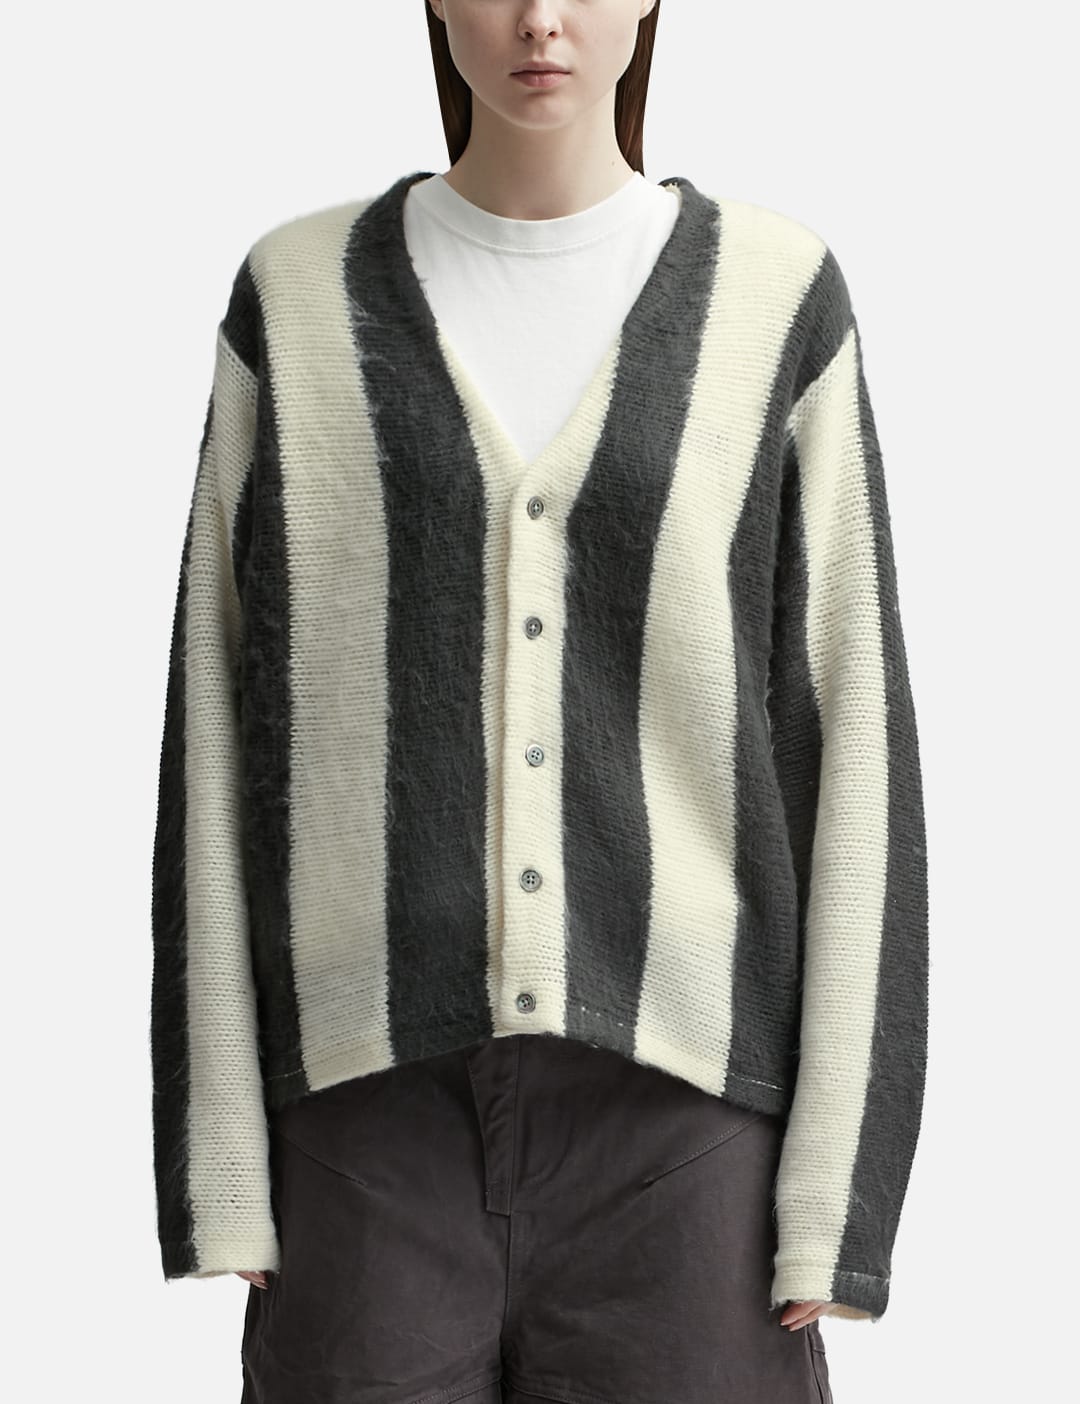 Stüssy - Stripe Brushed Cardigan | HBX - Globally Curated Fashion